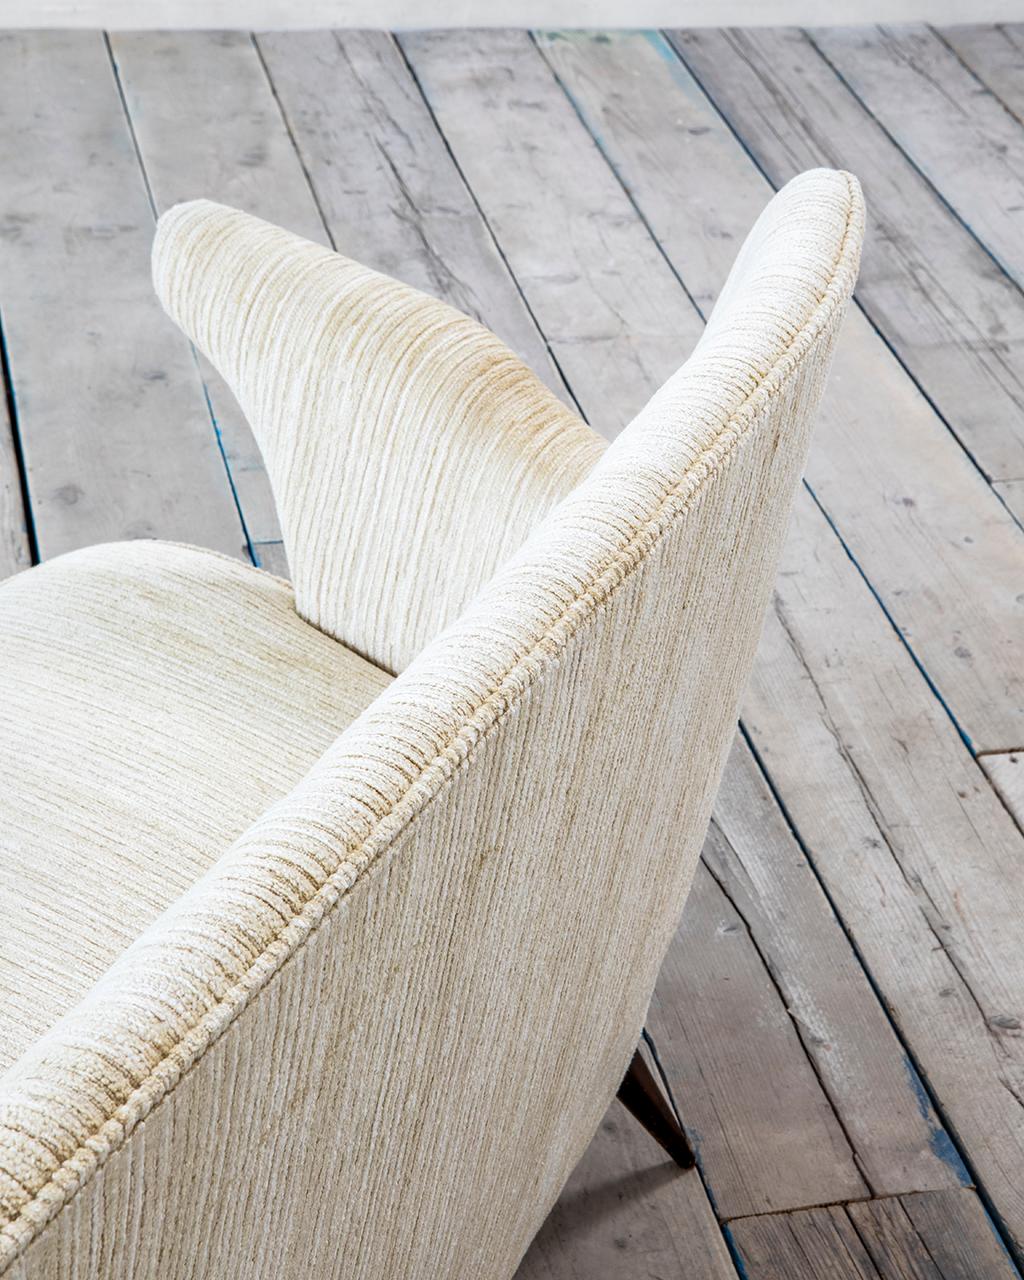 20th Century Nino Zoncada Sofa in Wood and White Fabric Upholstery 1